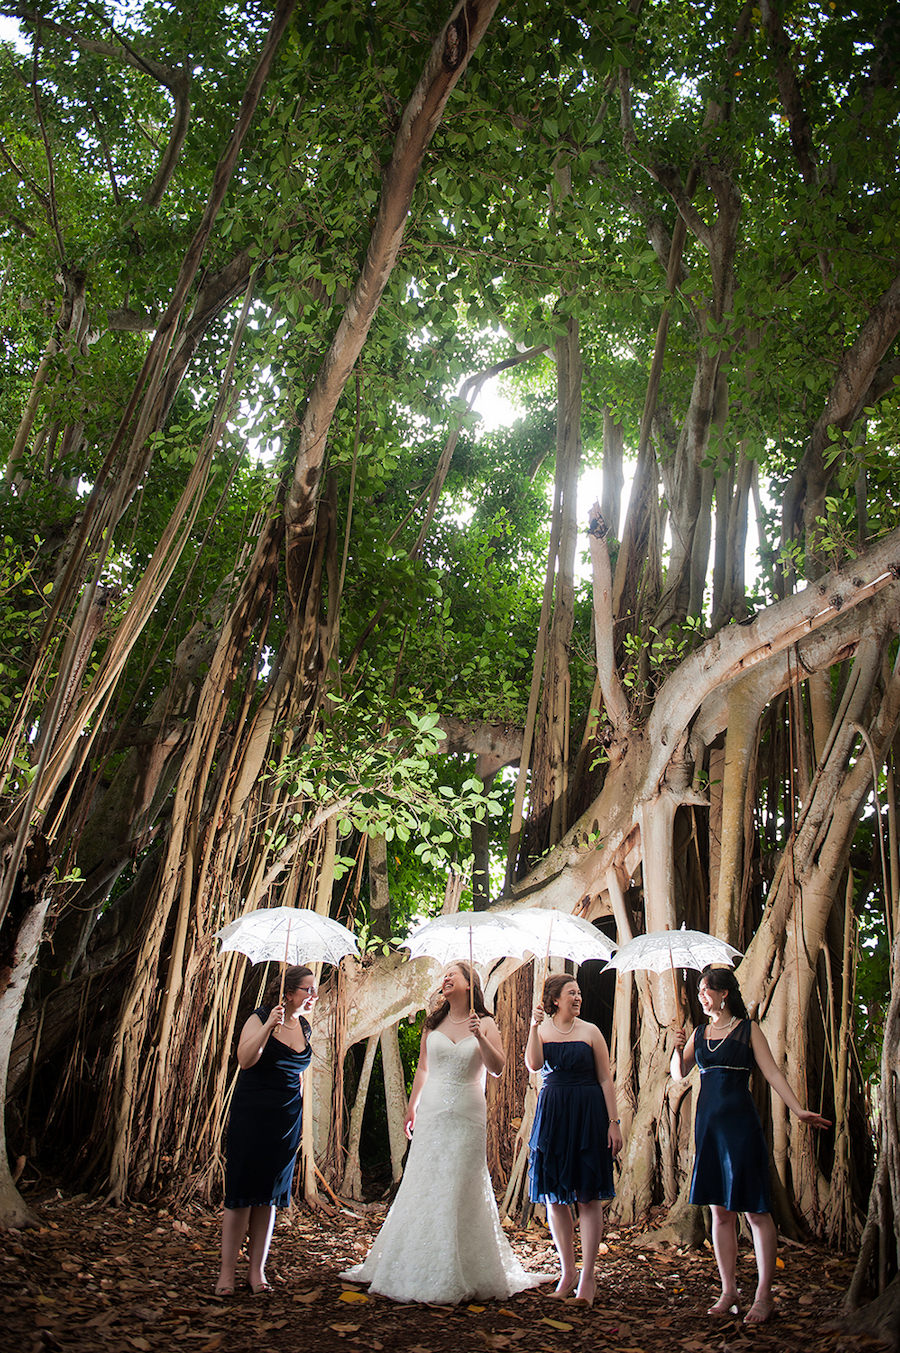 Outdoor Florida Bridal Party Wedding Day Portraits with Umbrellas | Tampa Bay Wedding Photographer Alexi Shields Photography